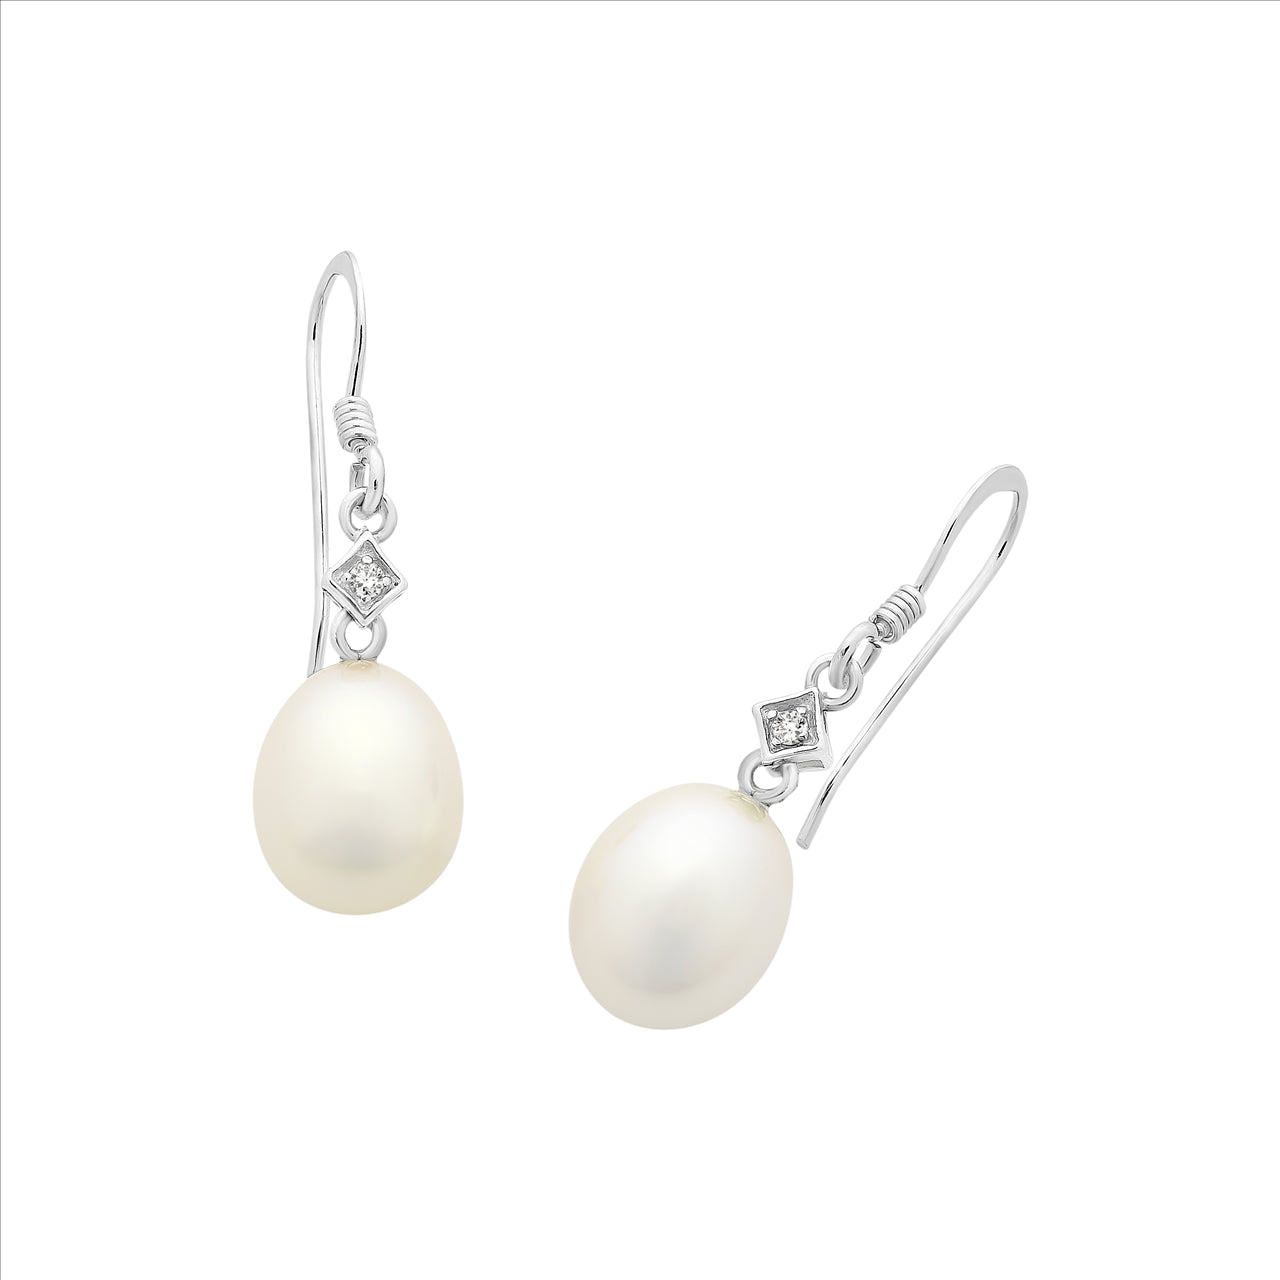 Cubic zirconia & freshwater pearl earrings Sterling silver